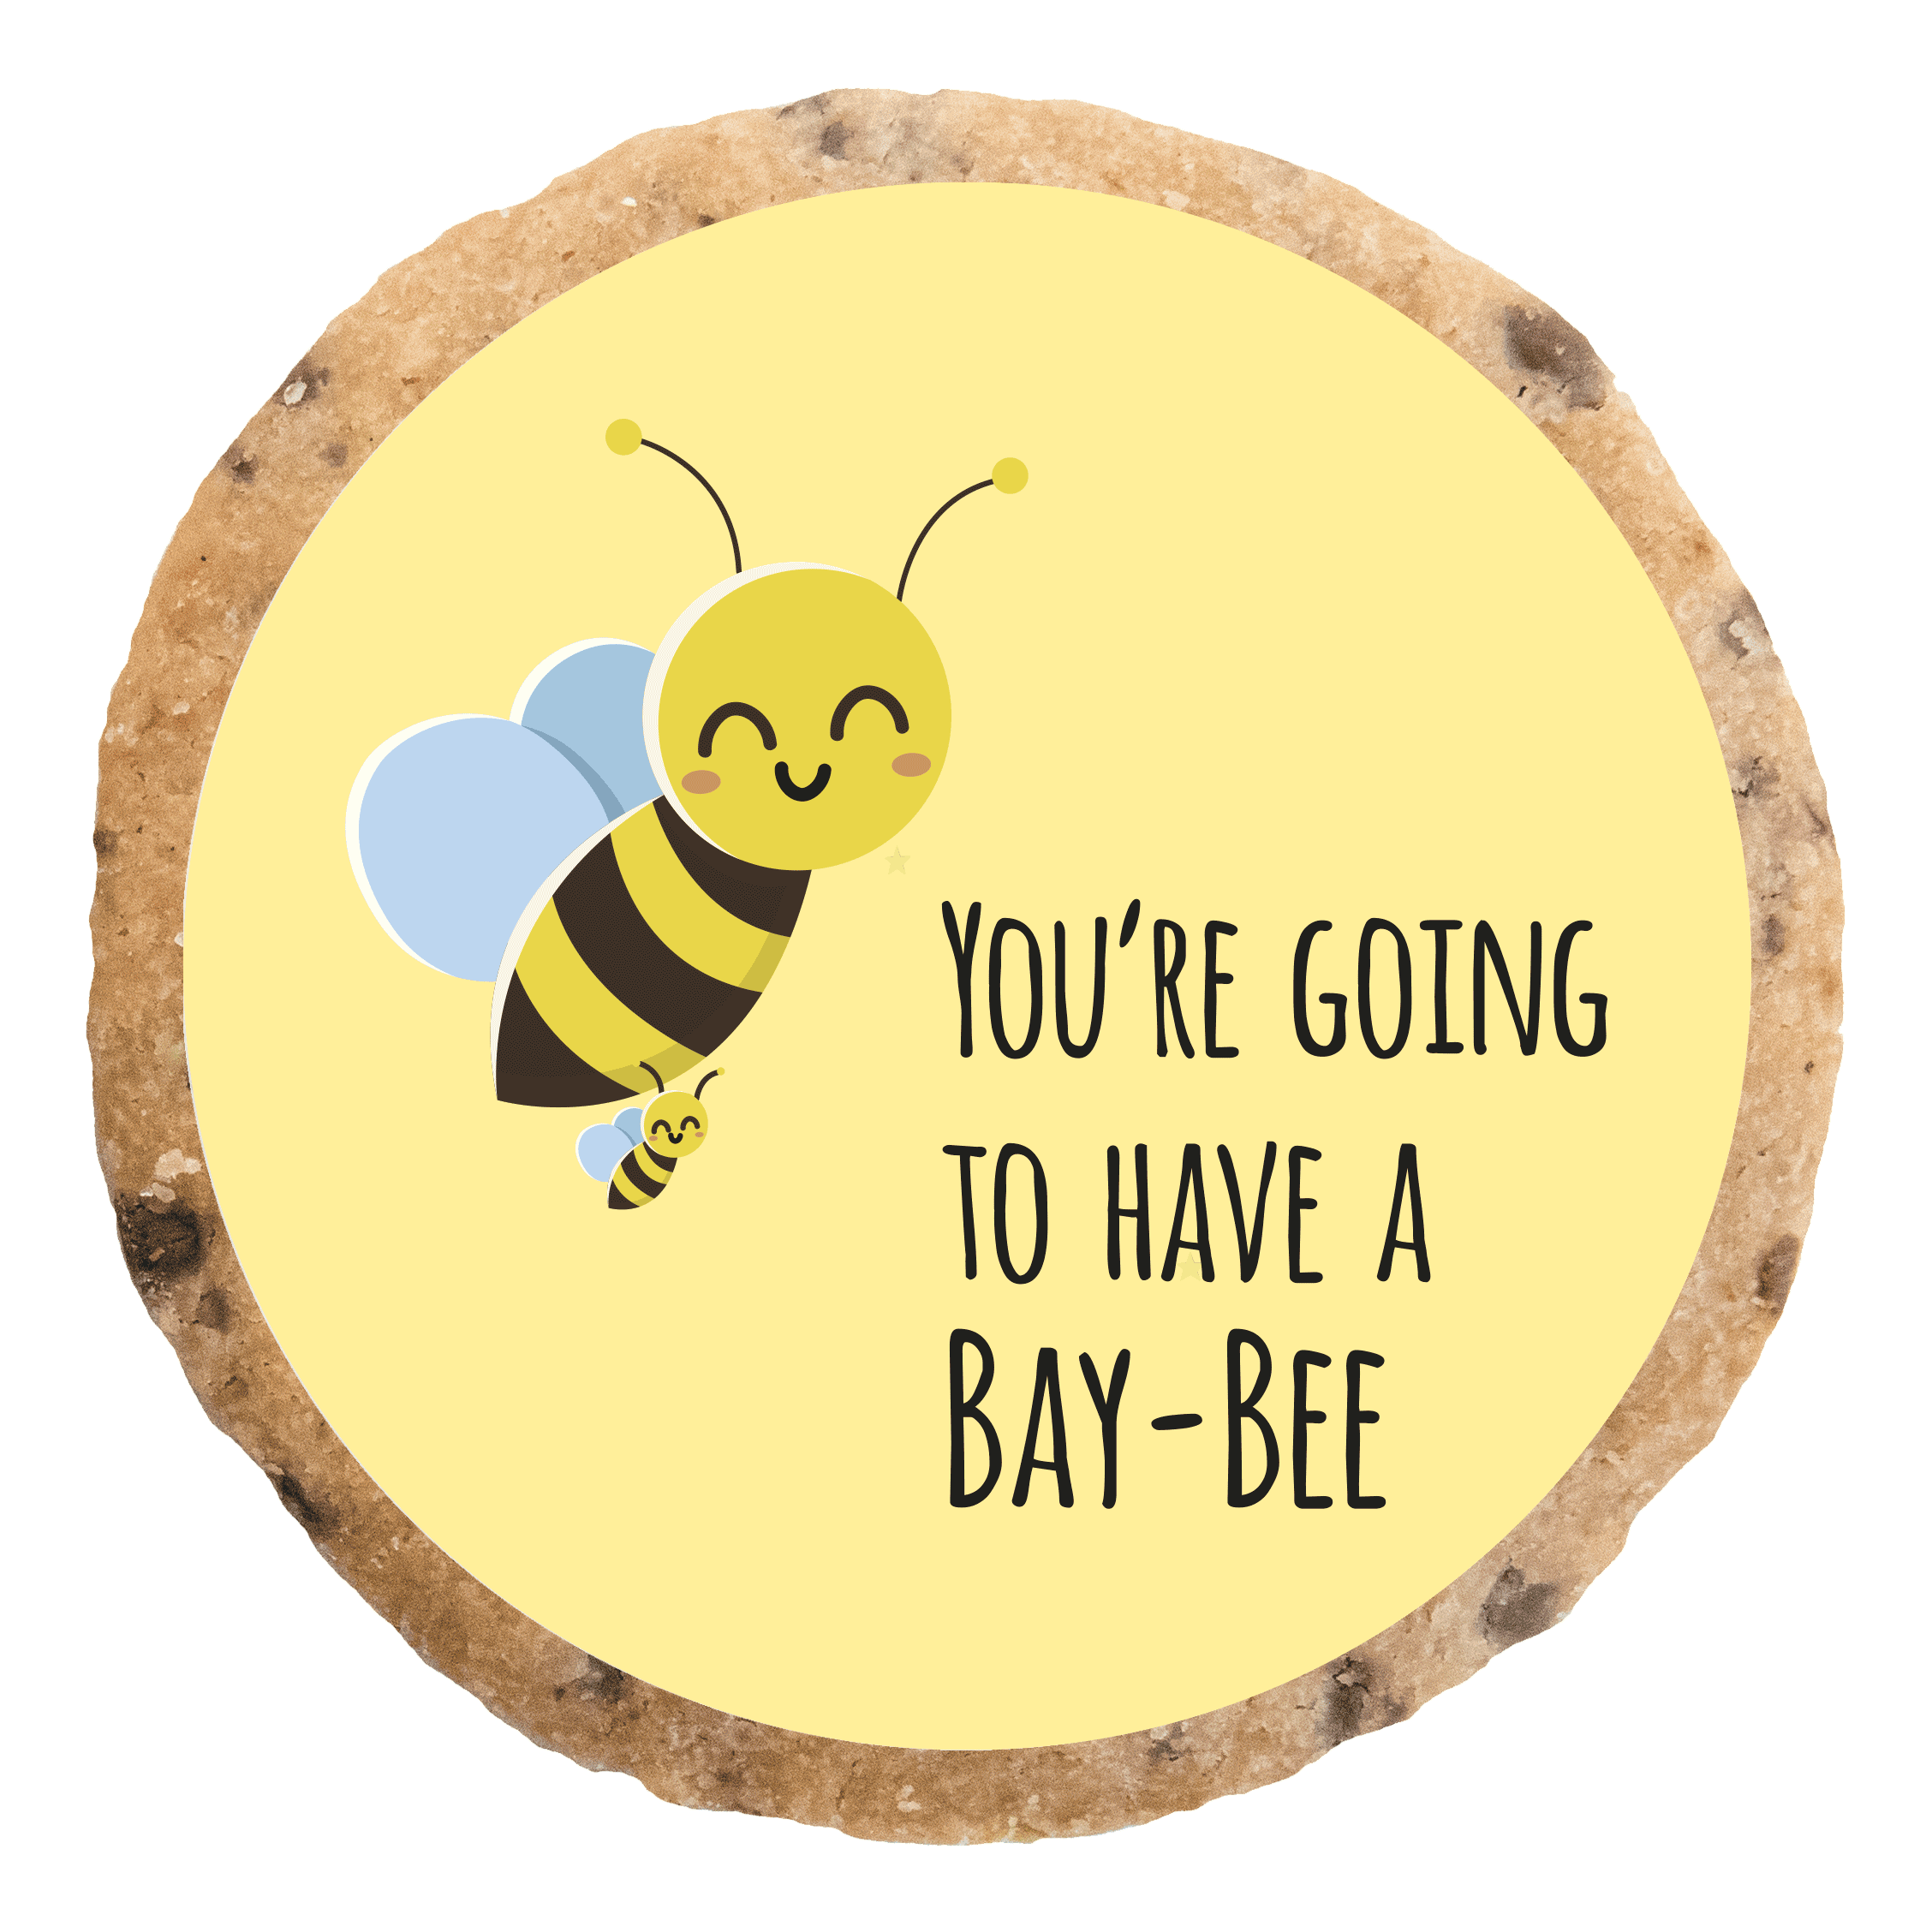 "Bay-bee" MotivKEKS